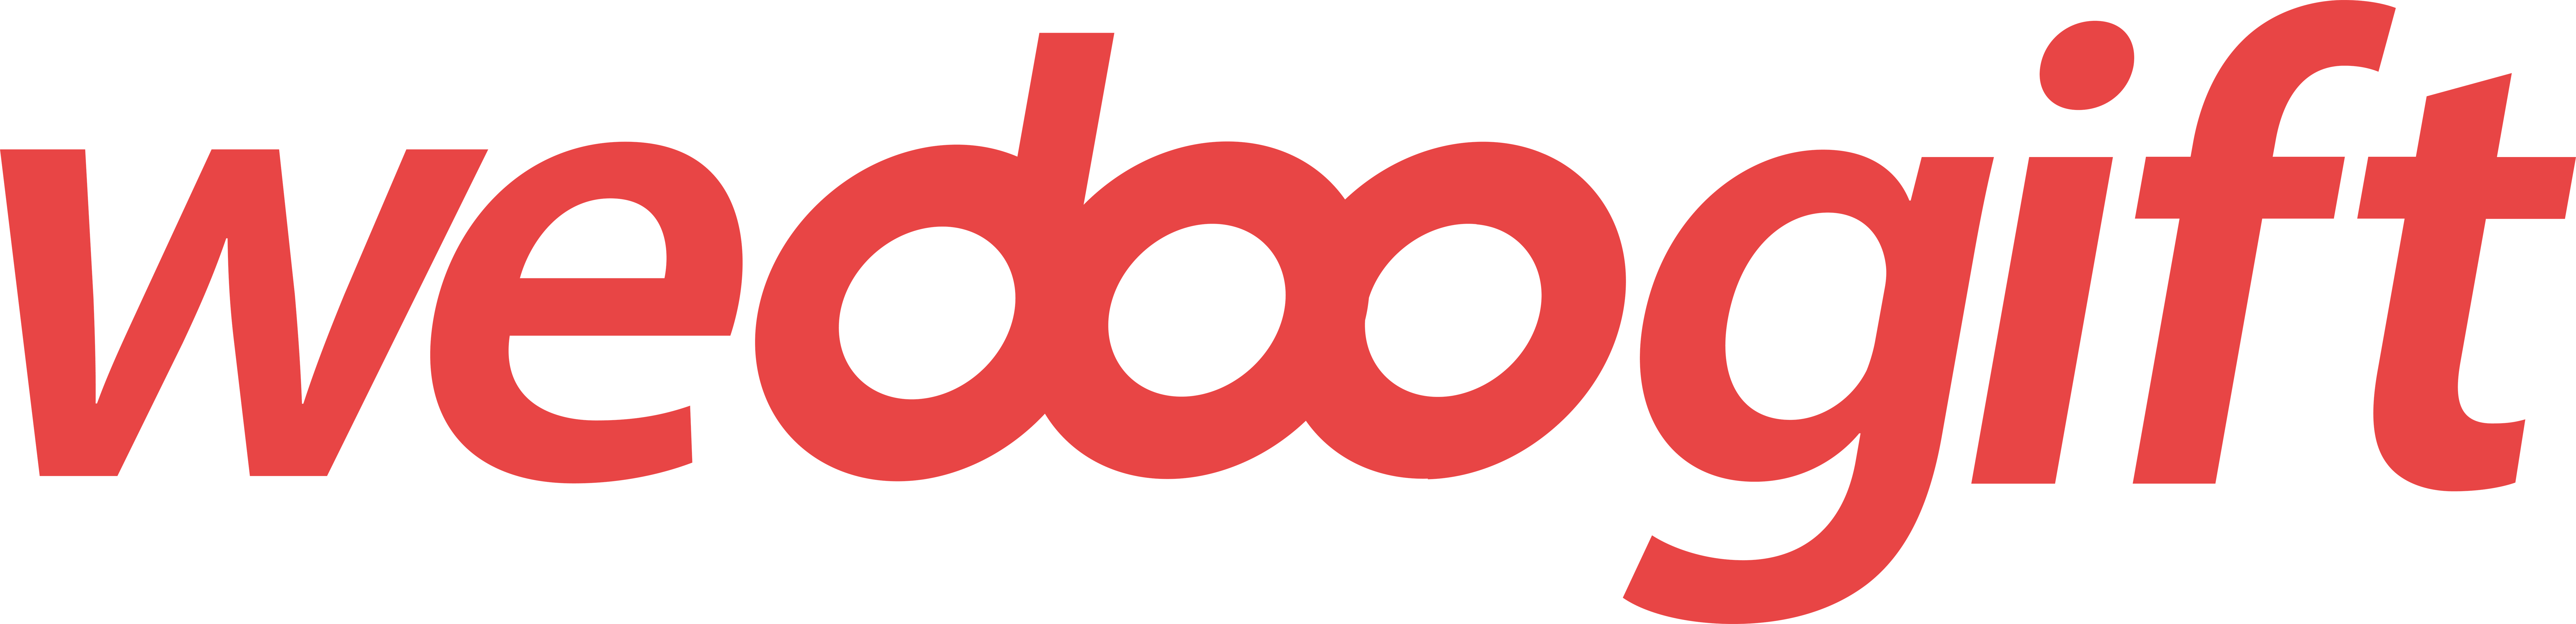 Wedoogift Logo